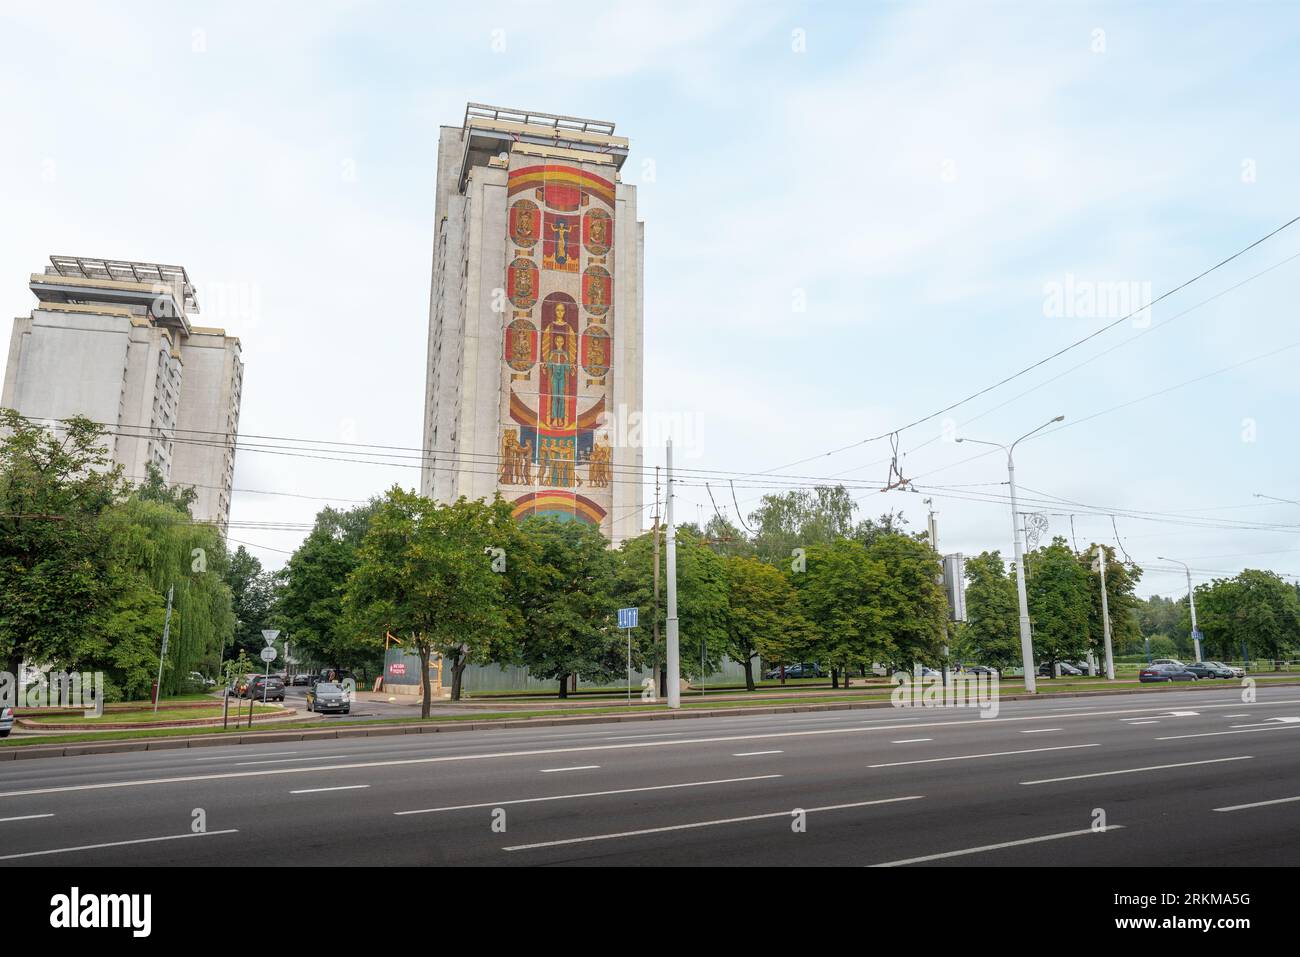 Soviet Era Buildings with City of Heroes Mosaic by Alexander Kishchenko - Minsk, Belarus Stock Photo